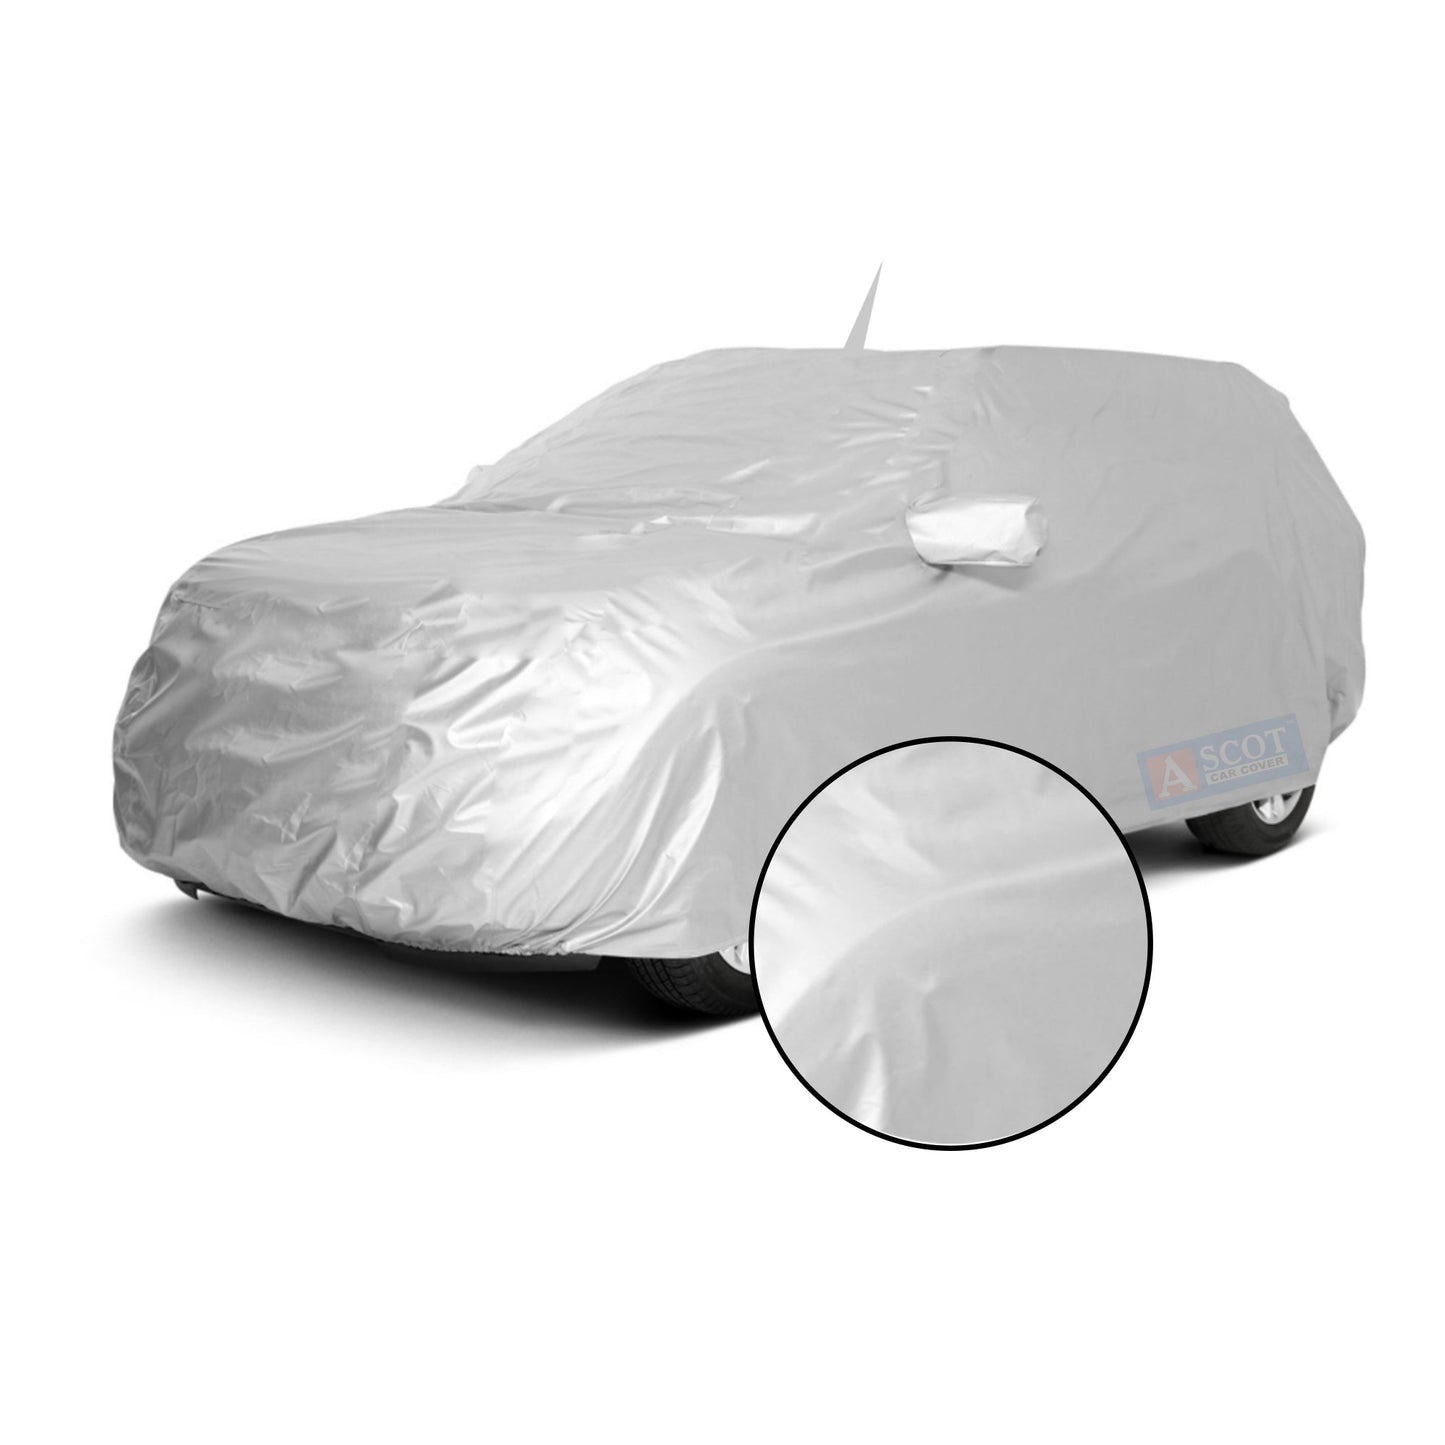 Ascot Audi A8 L 2010-2017 Model Car Body Cover Dust Proof, Trippel Stitched